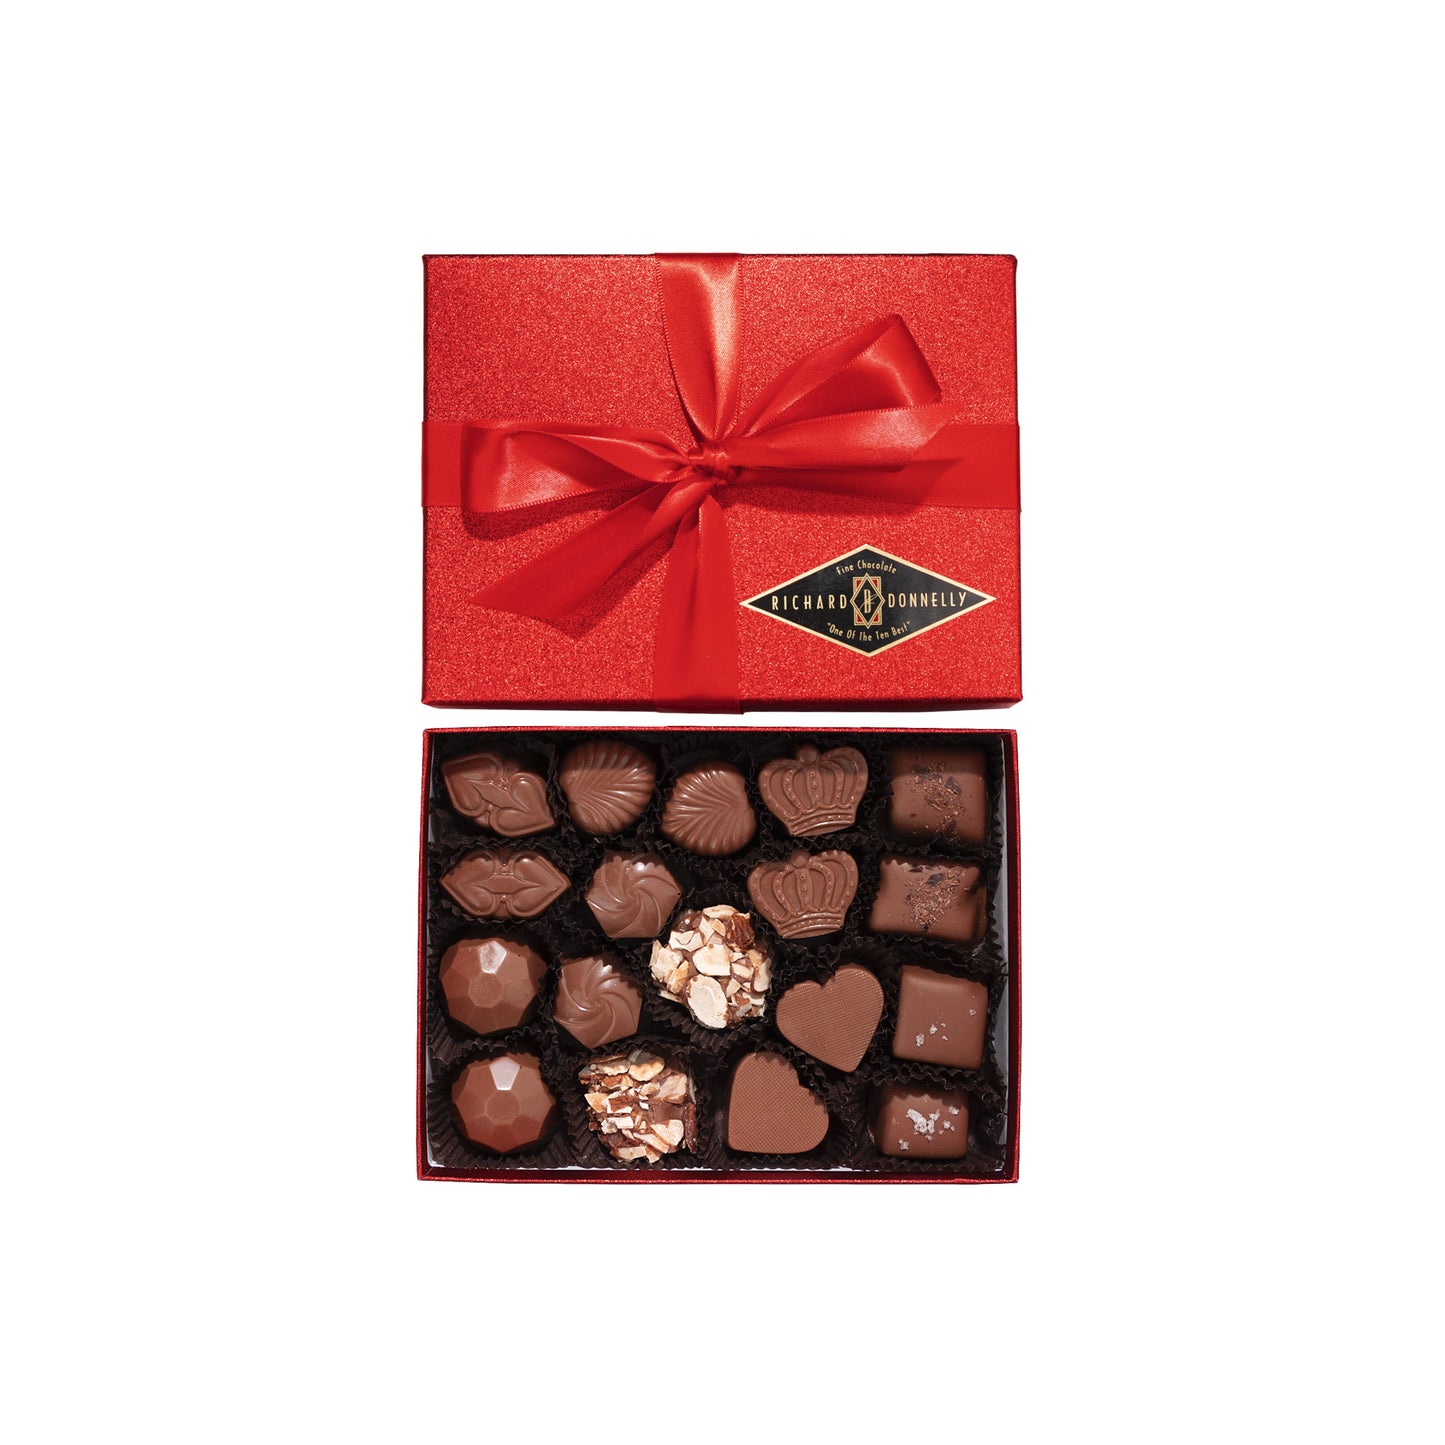 16/20 Piece Milk Chocolate Gift Box